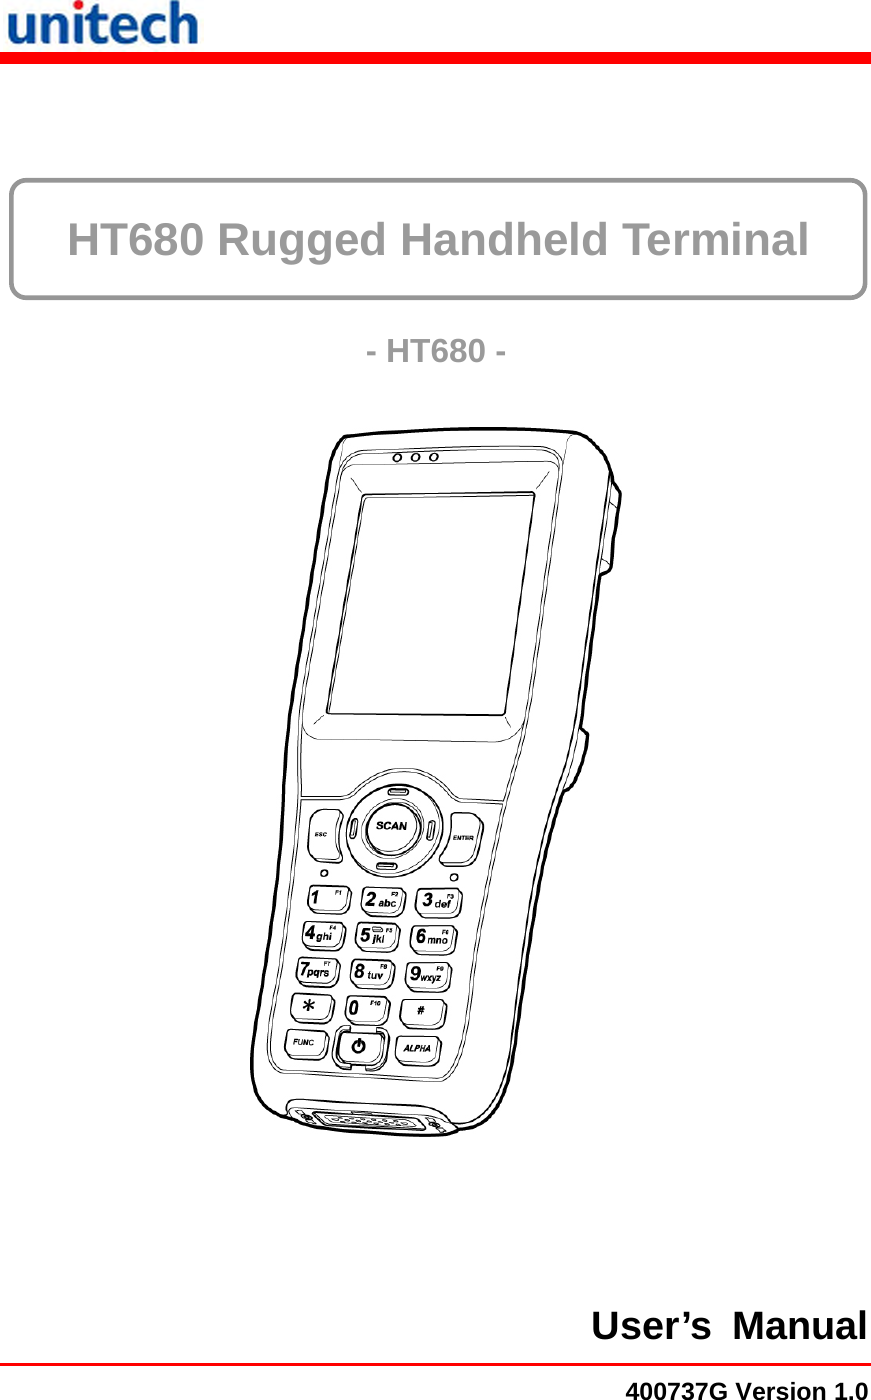      HT680 Rugged Handheld Terminal    - HT680 -  User’s Manual400737G Version 1.0 